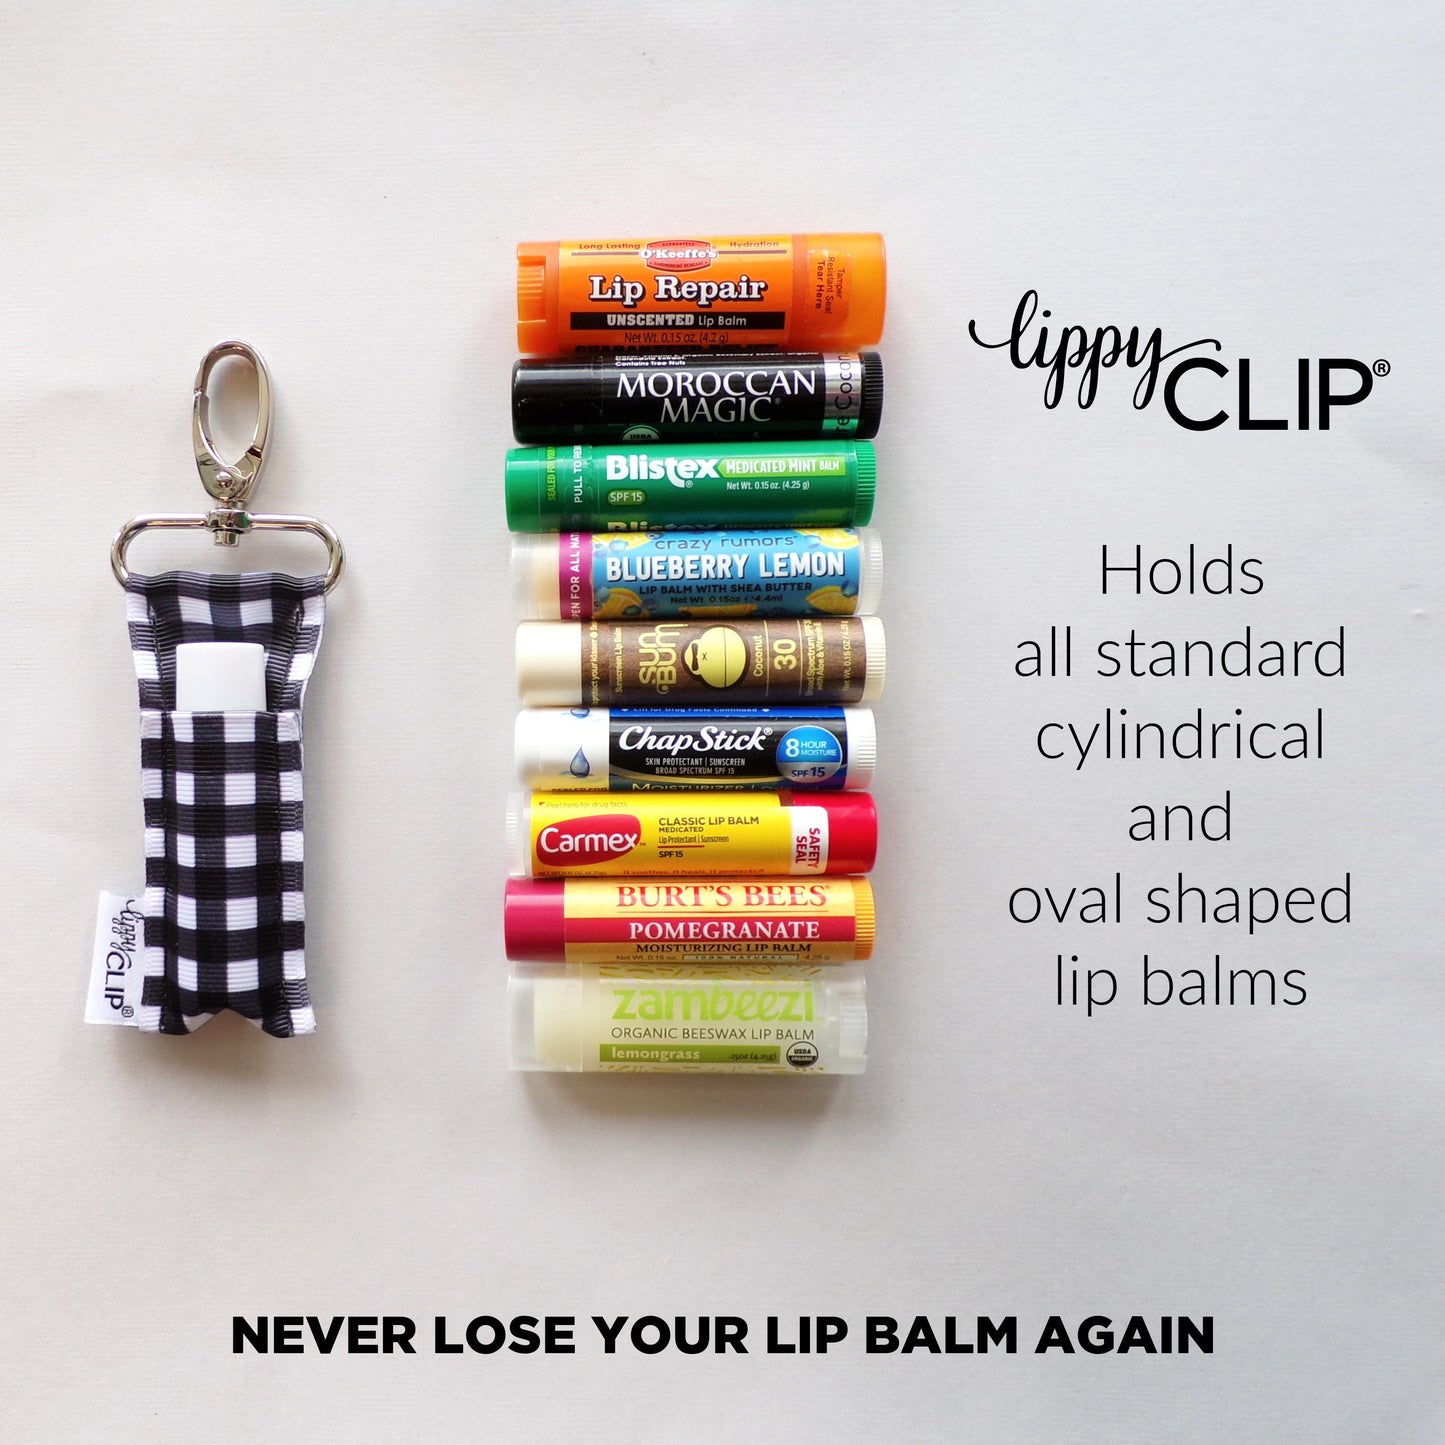 Bicycles LippyClip® Lip Balm Holder